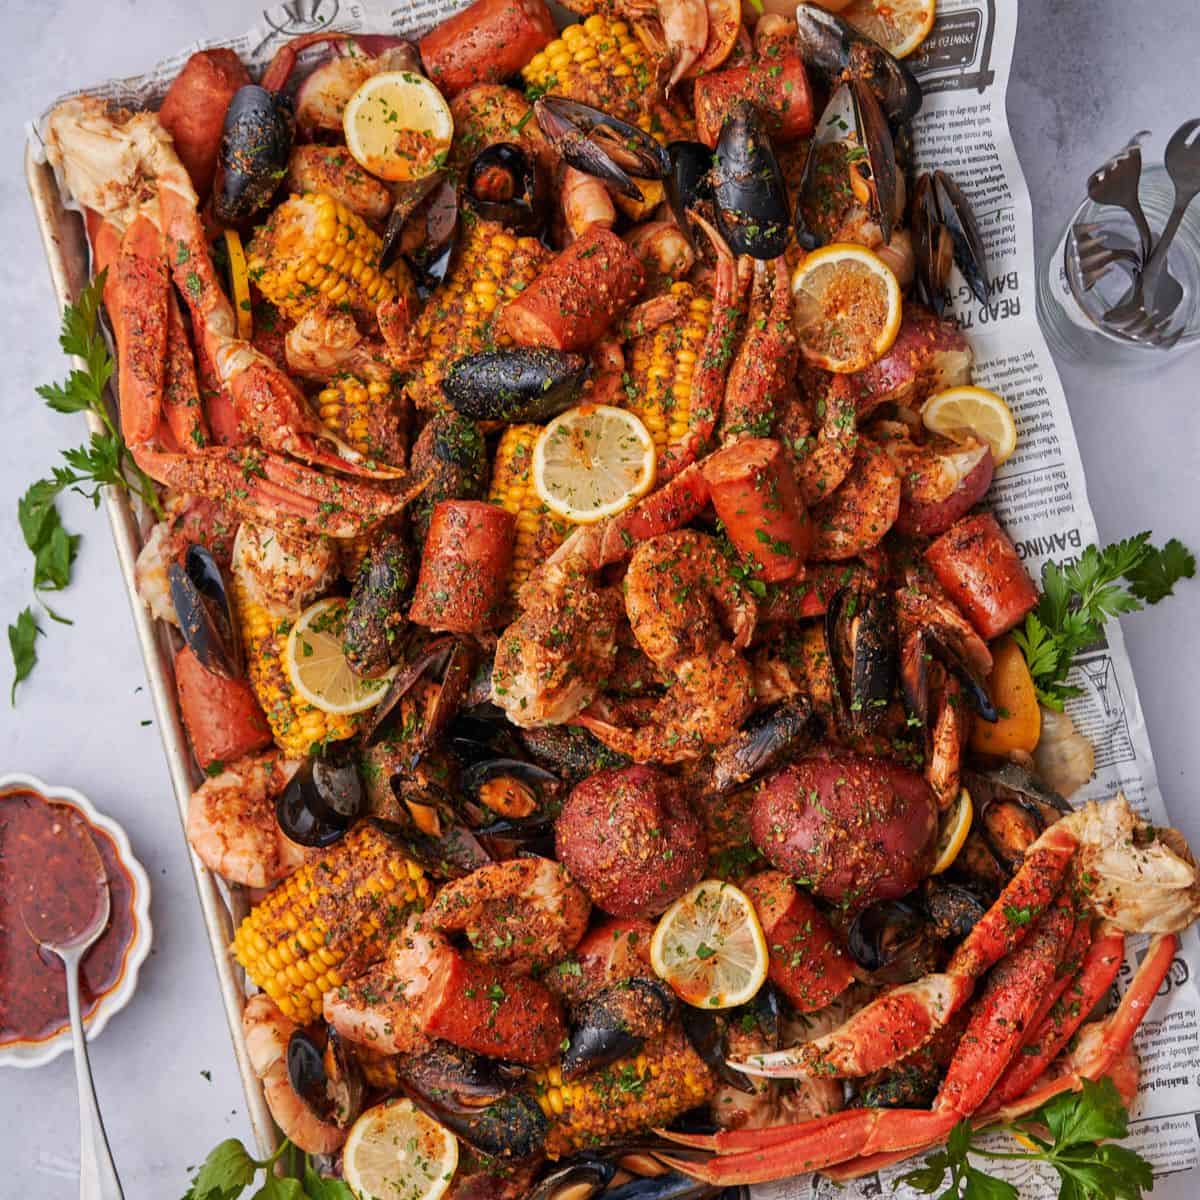 Cajun Seafood Boil Recipe - A Full Living